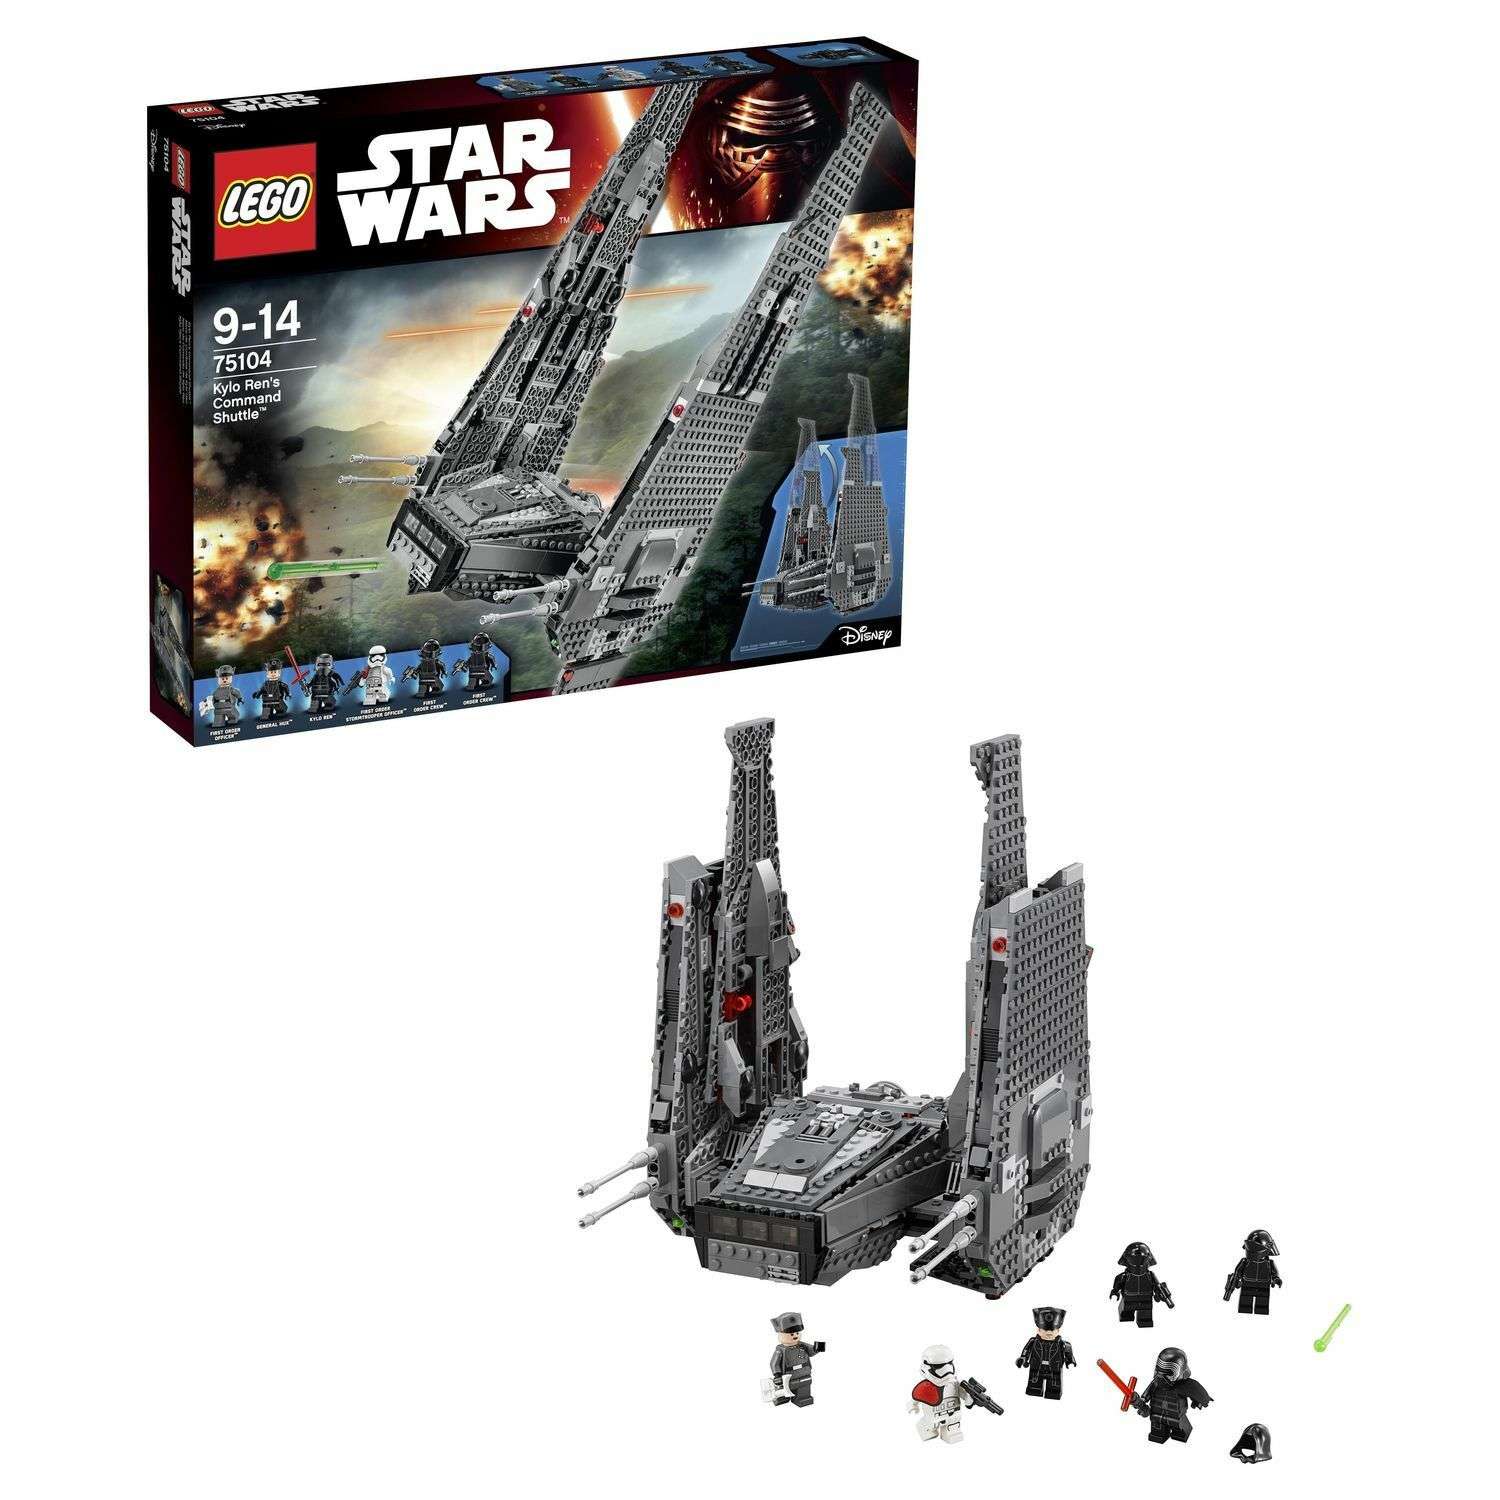 Конструктор LEGO Star Wars TM Командный шаттл Кайло Рена (Kylo Ren's Command Shuttle™) (75104) - фото 1